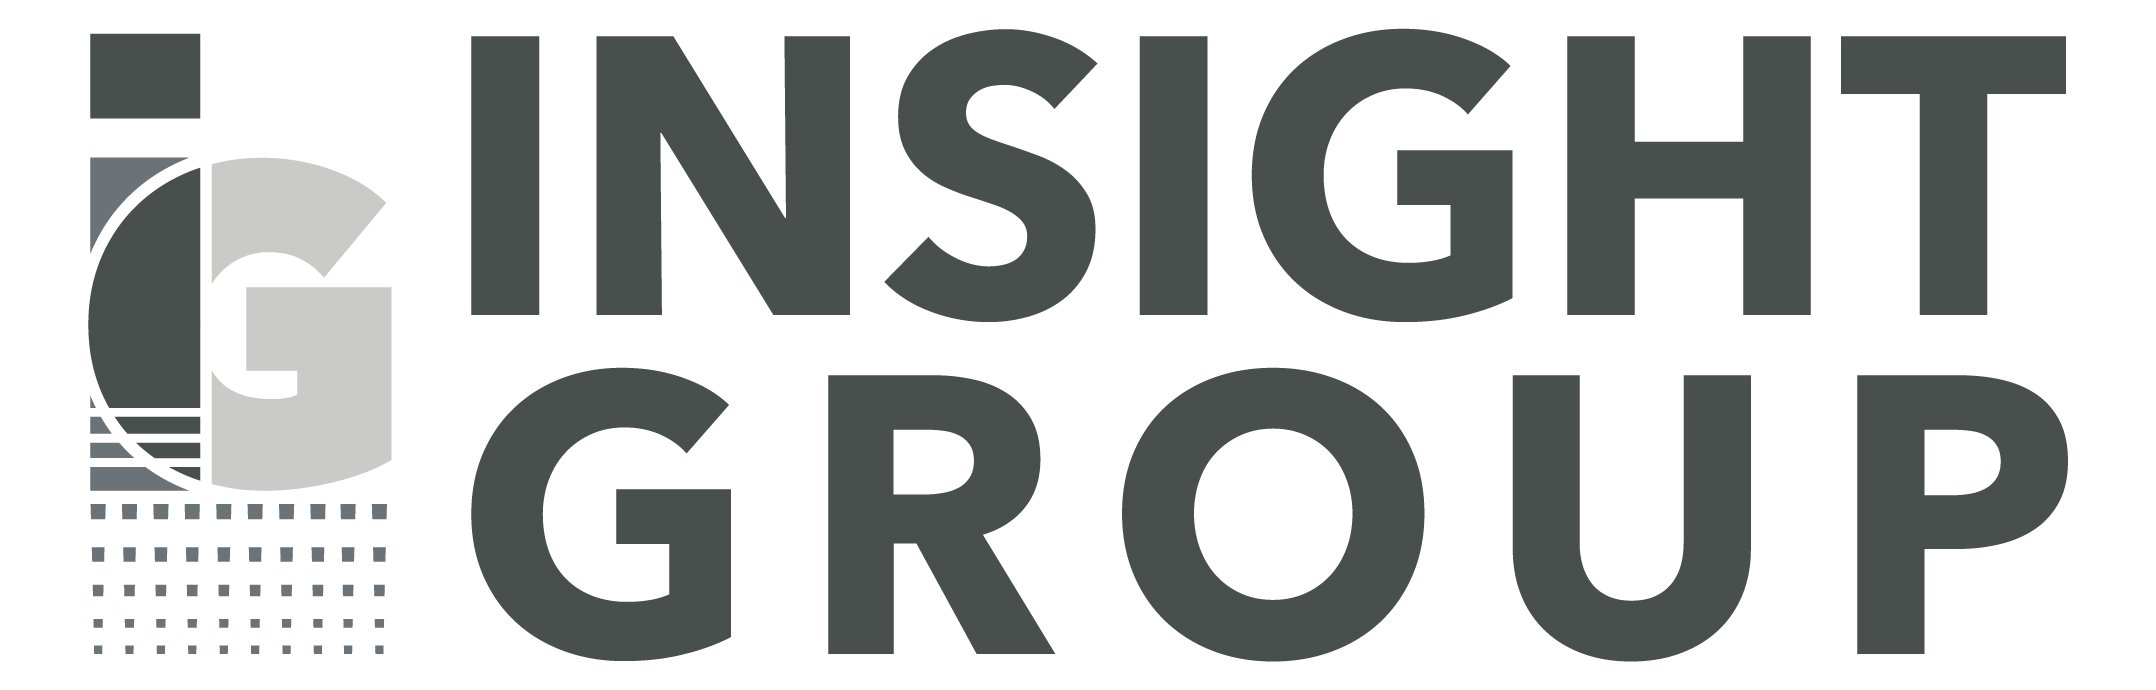 insight-group-logo.jpg